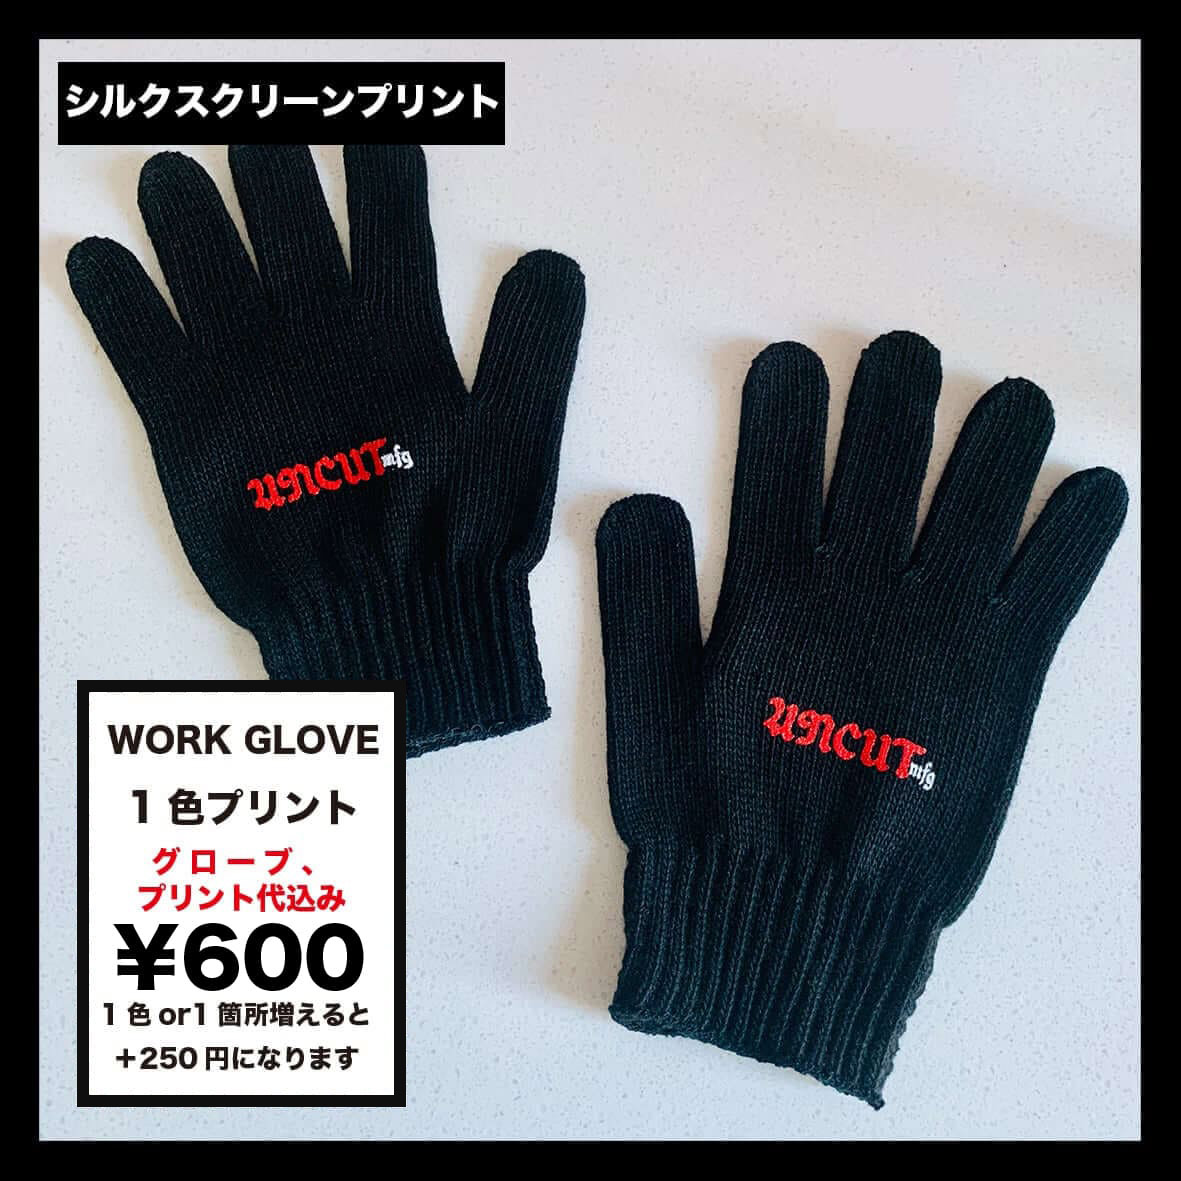 Work Gloves (品番LC92)